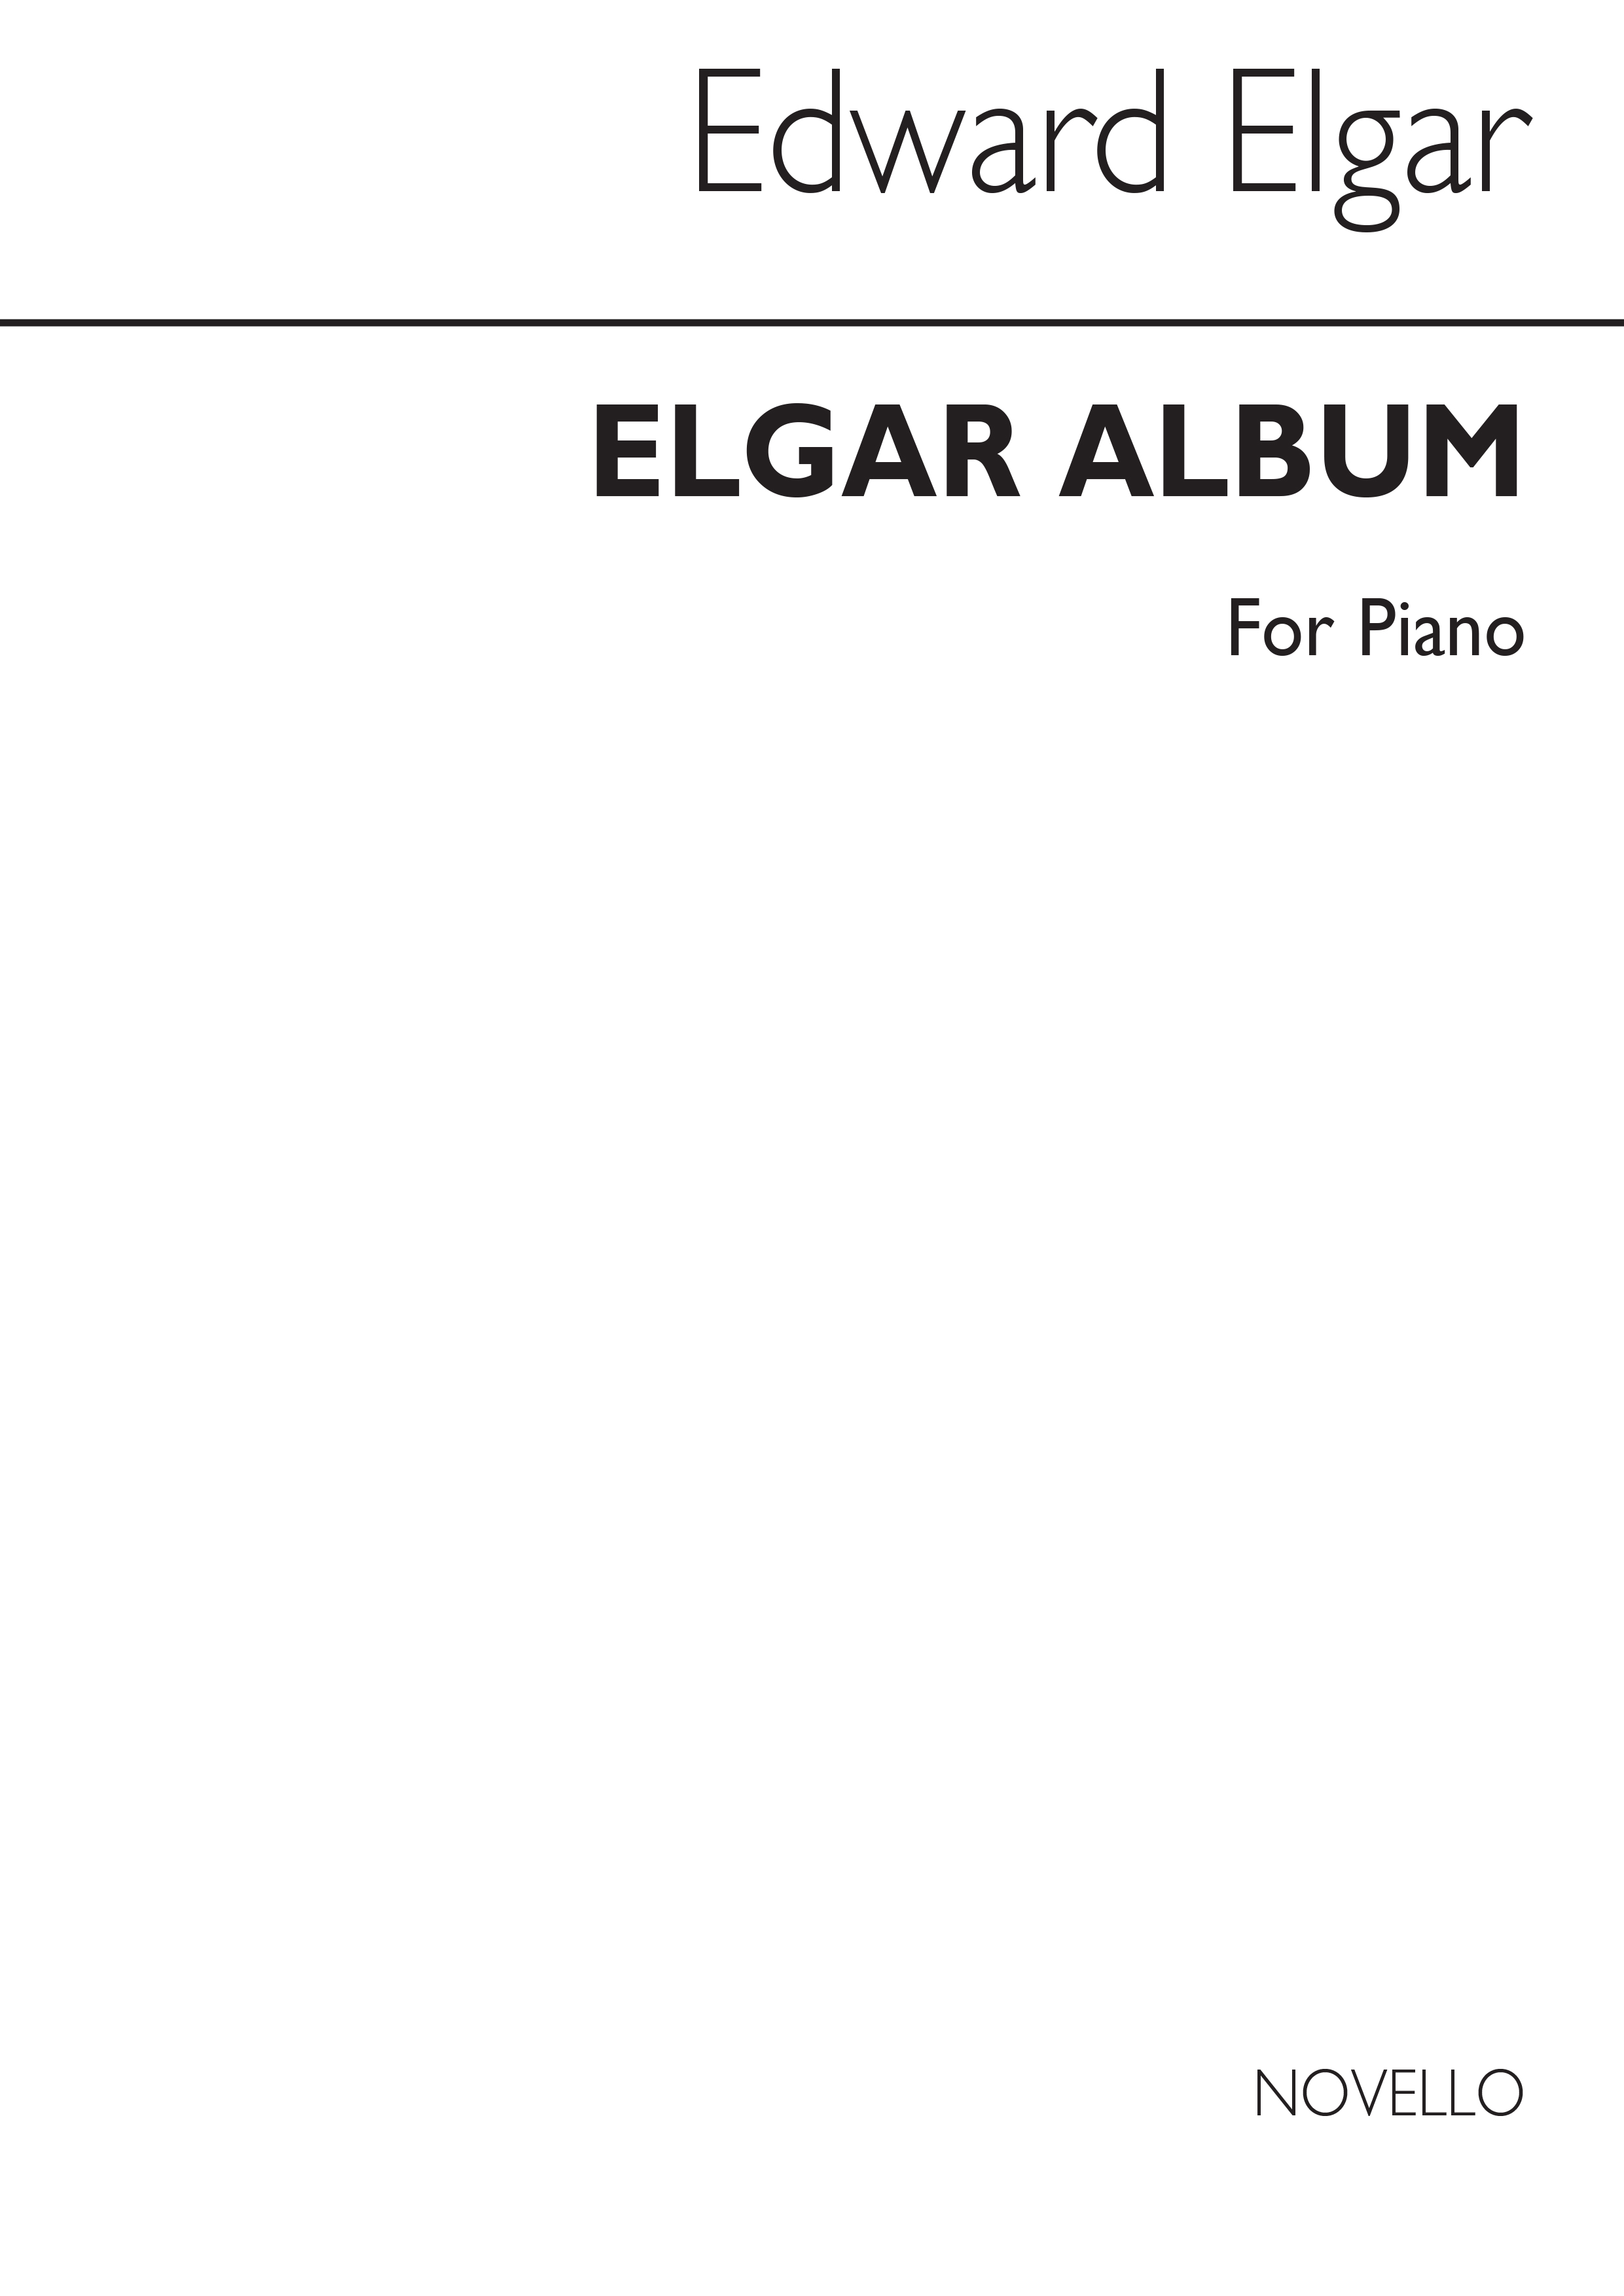 Edward Elgar: Music For Piano